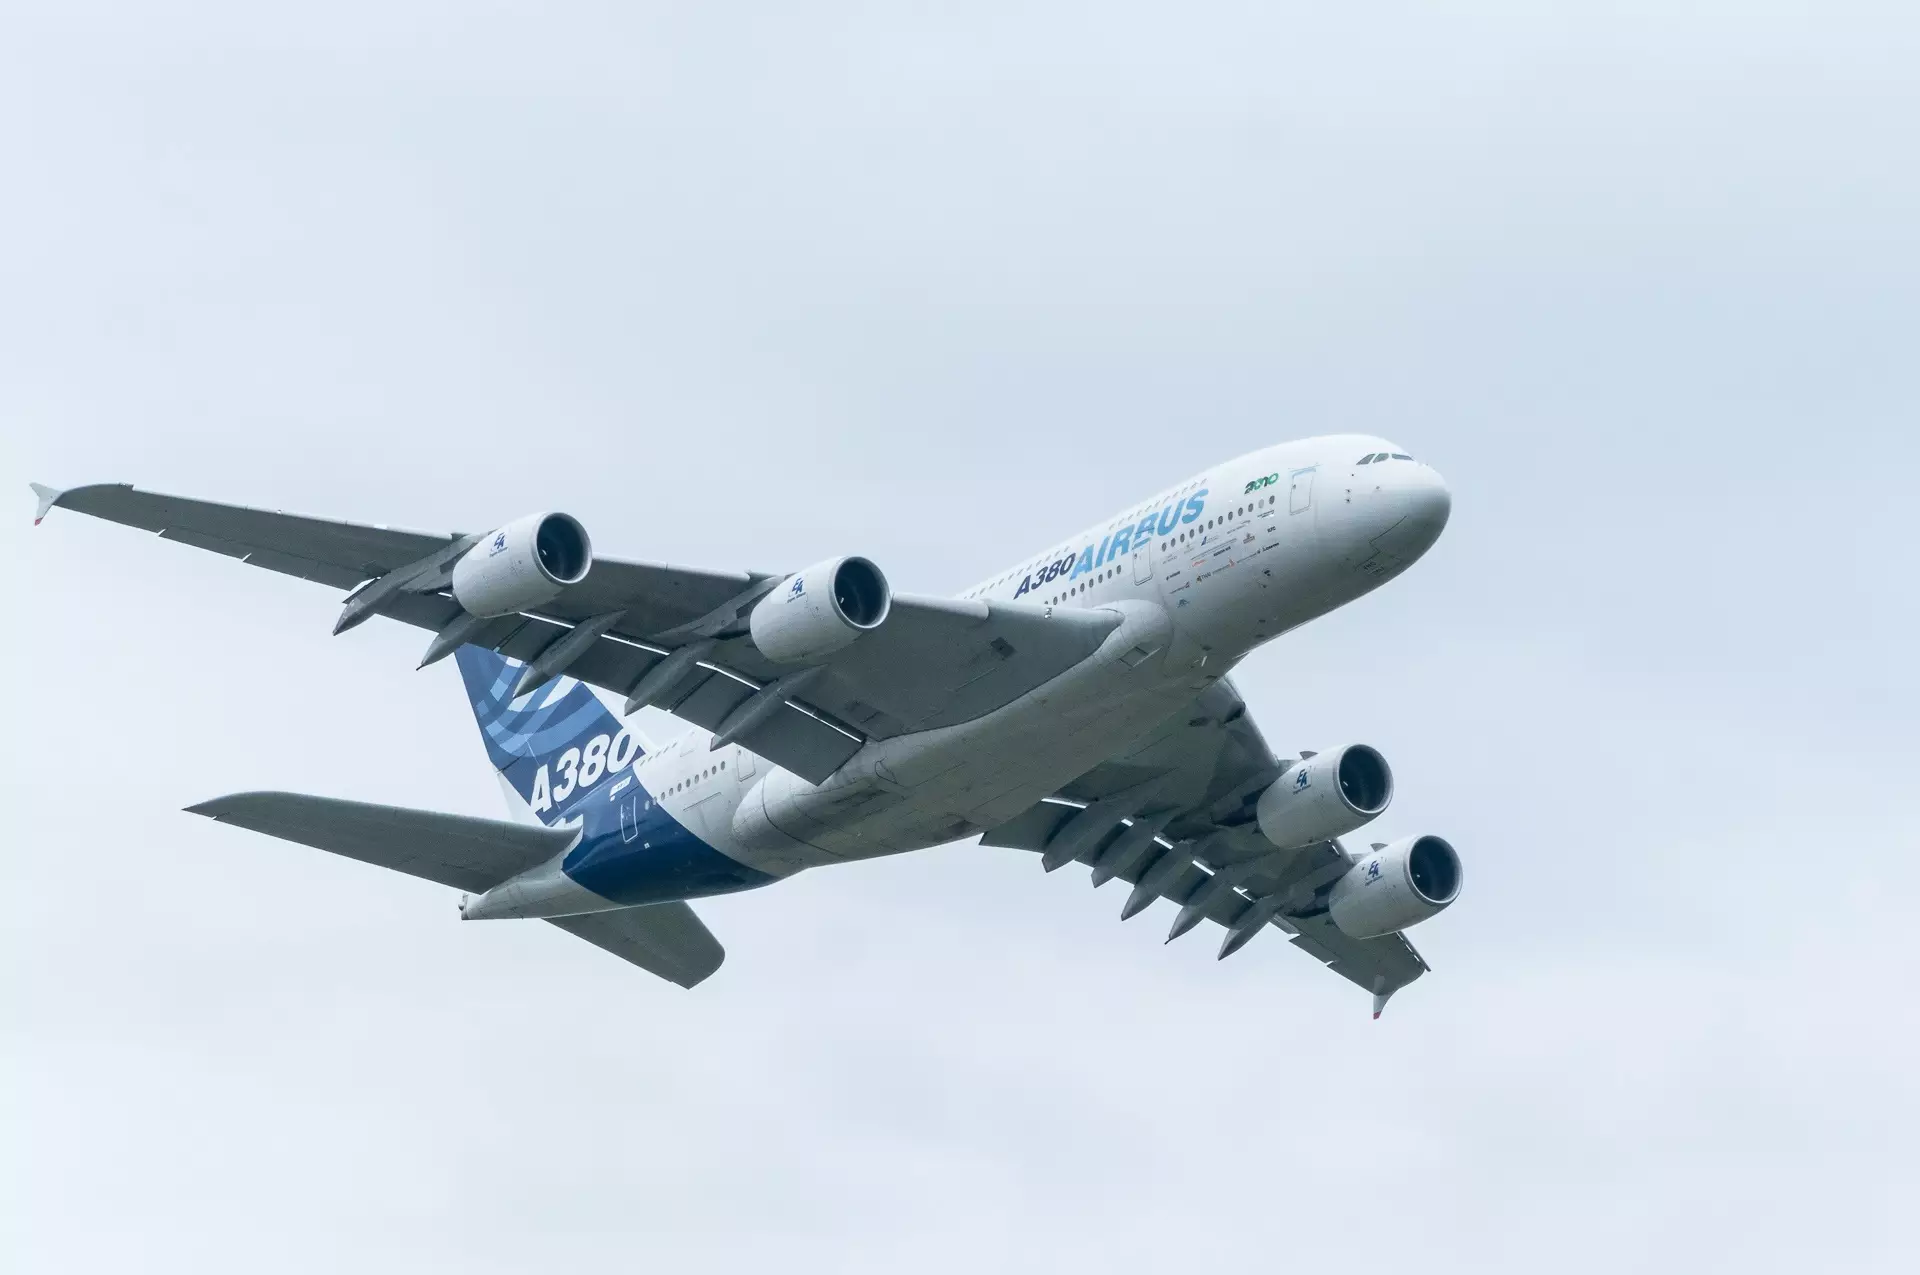 За 12 лет полетов A380 не погиб ни один пассажир или член экипажа